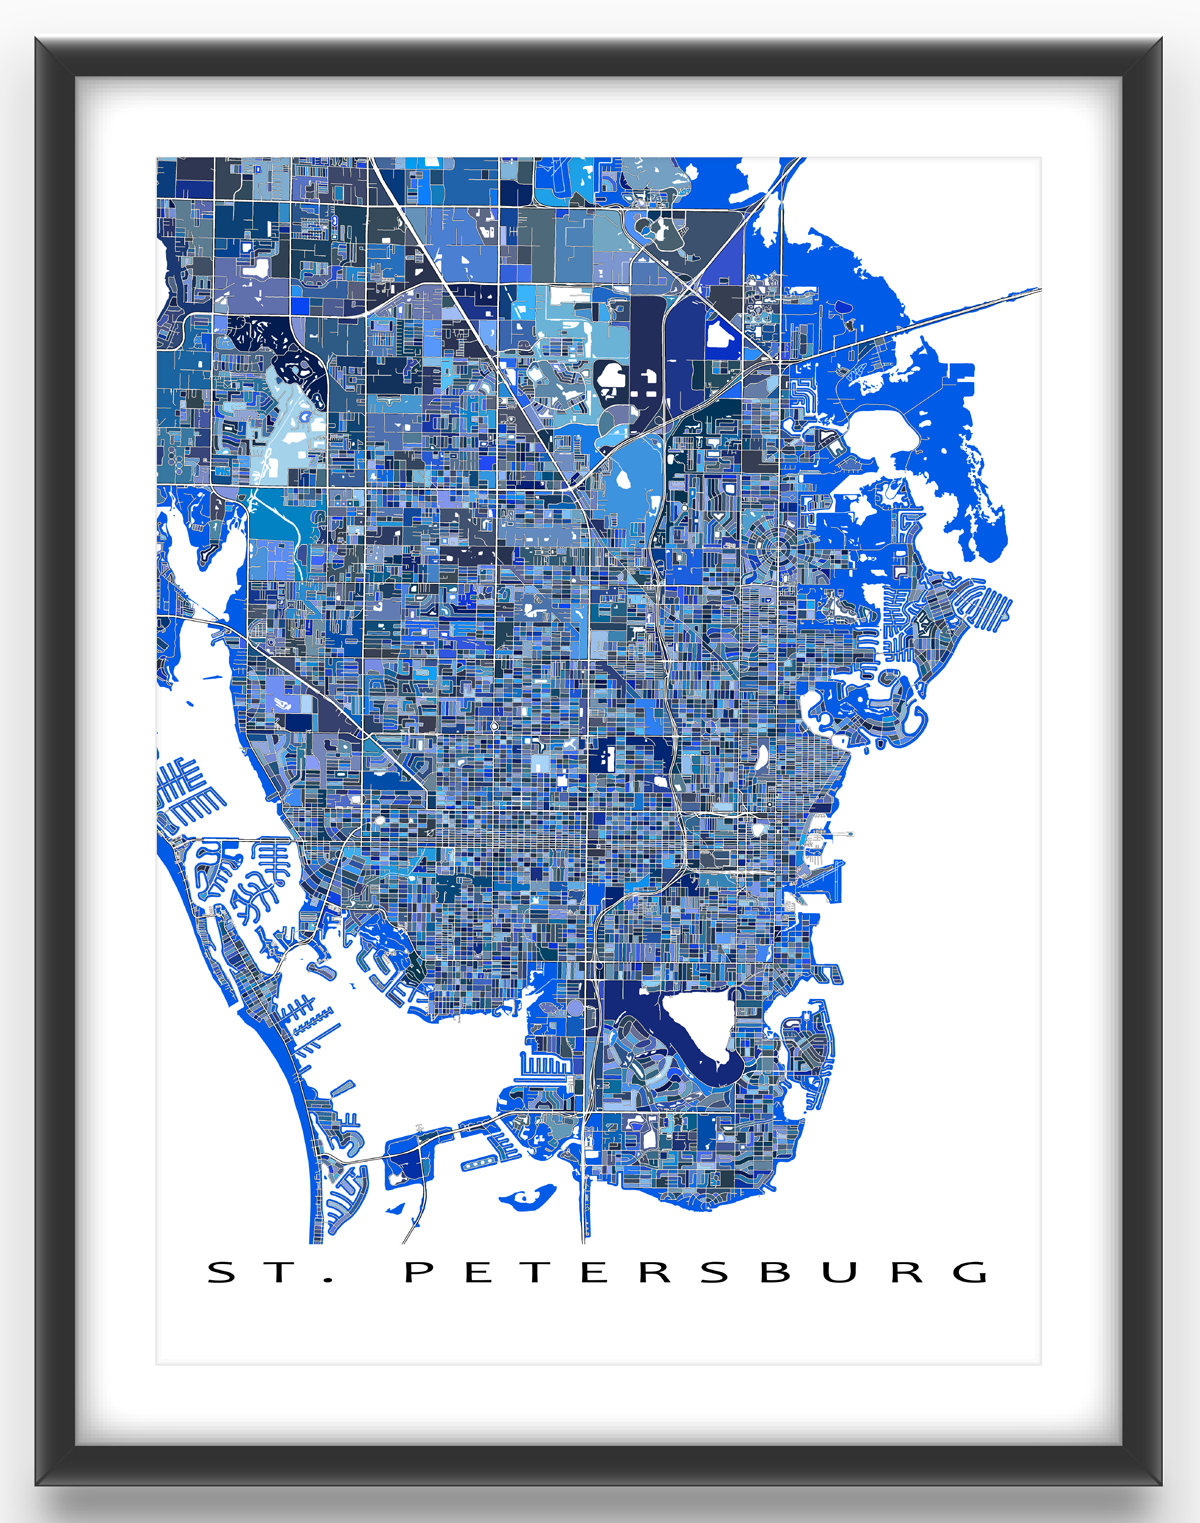 St. Petersburg Map Print Featuring The City Of St. Petersburg - Florida Map Artwork